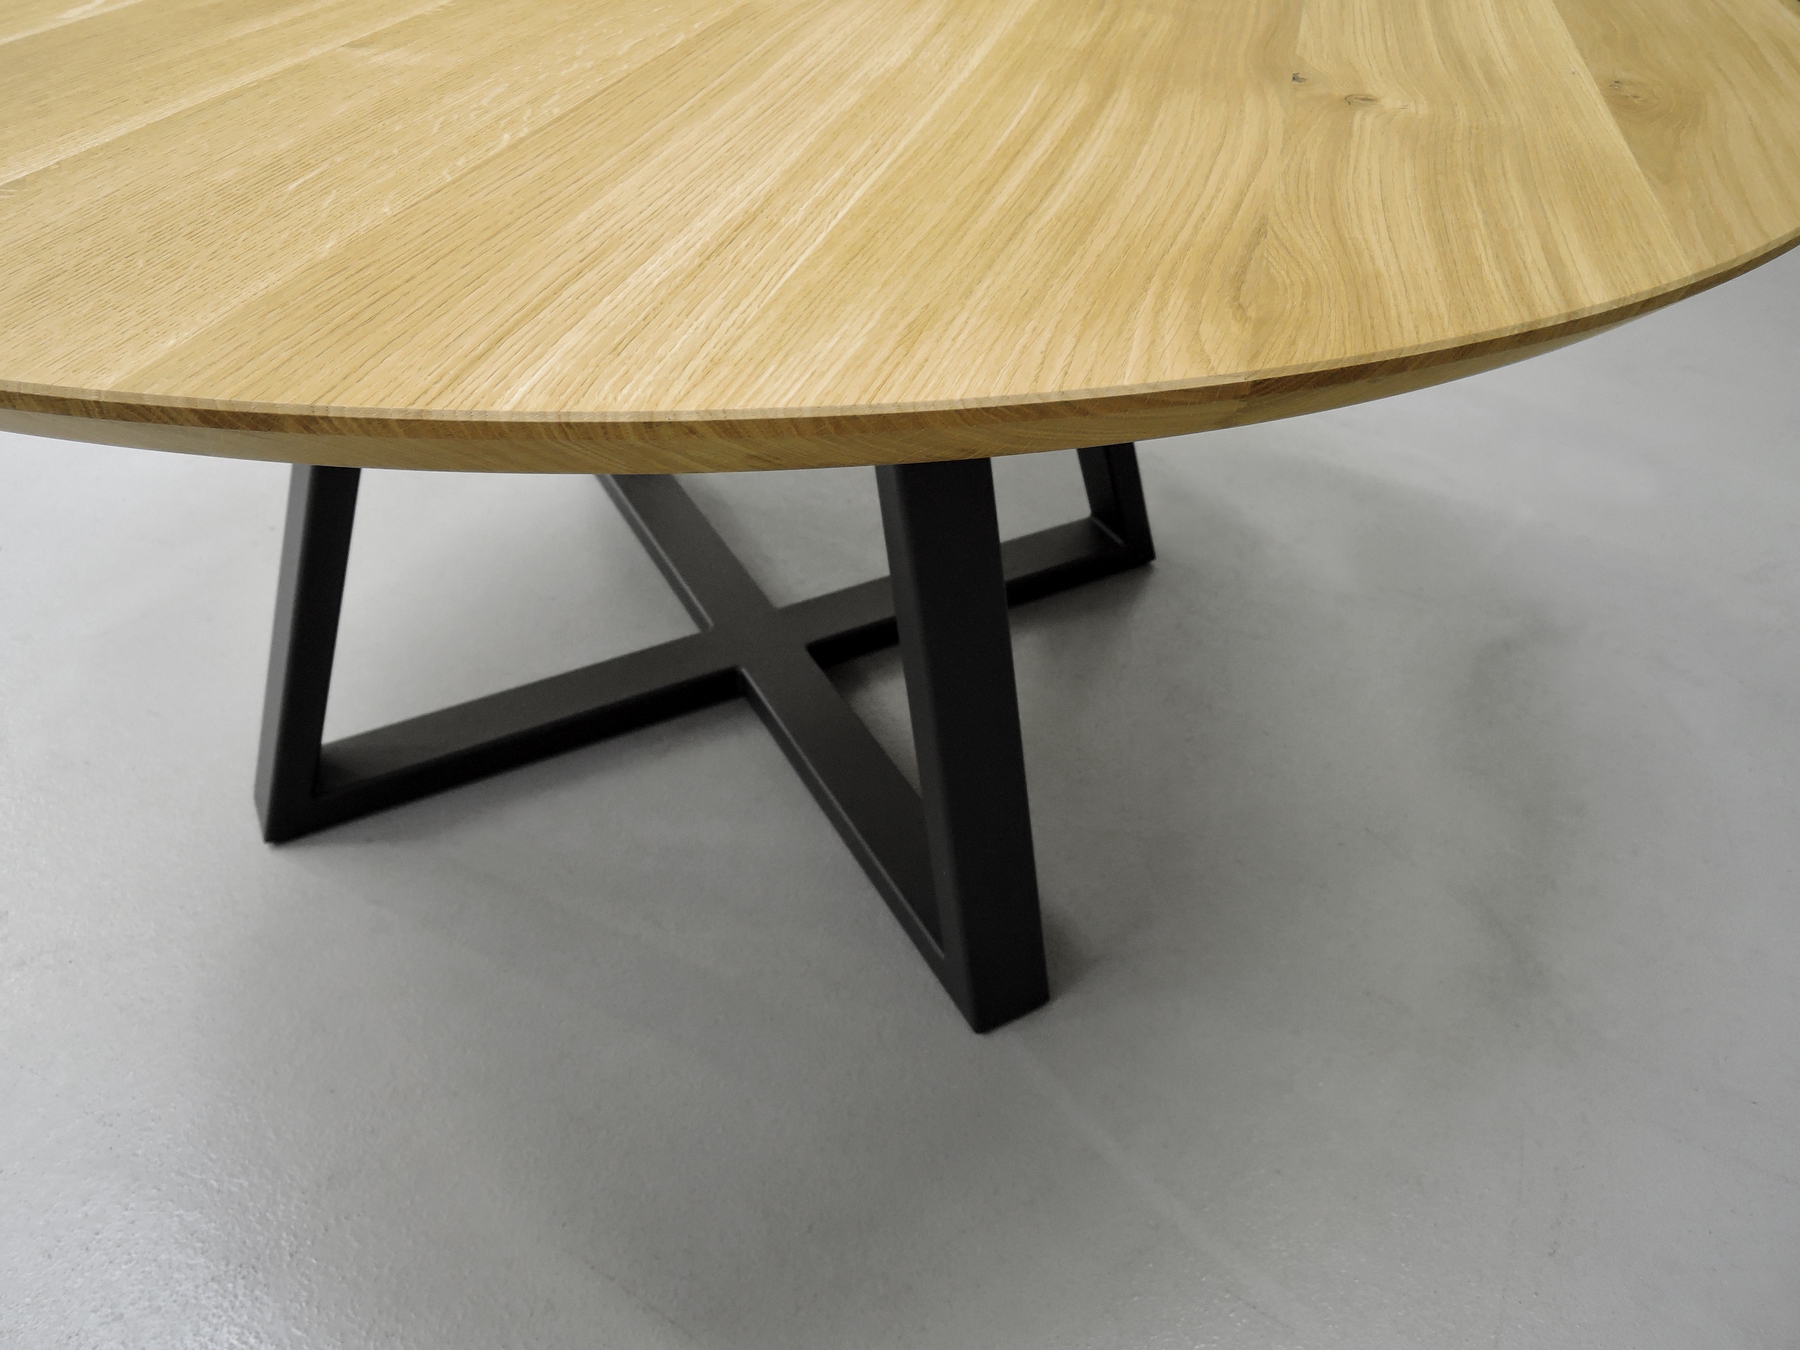 ARTMETA / table Symbole ronde en acier et bois massif